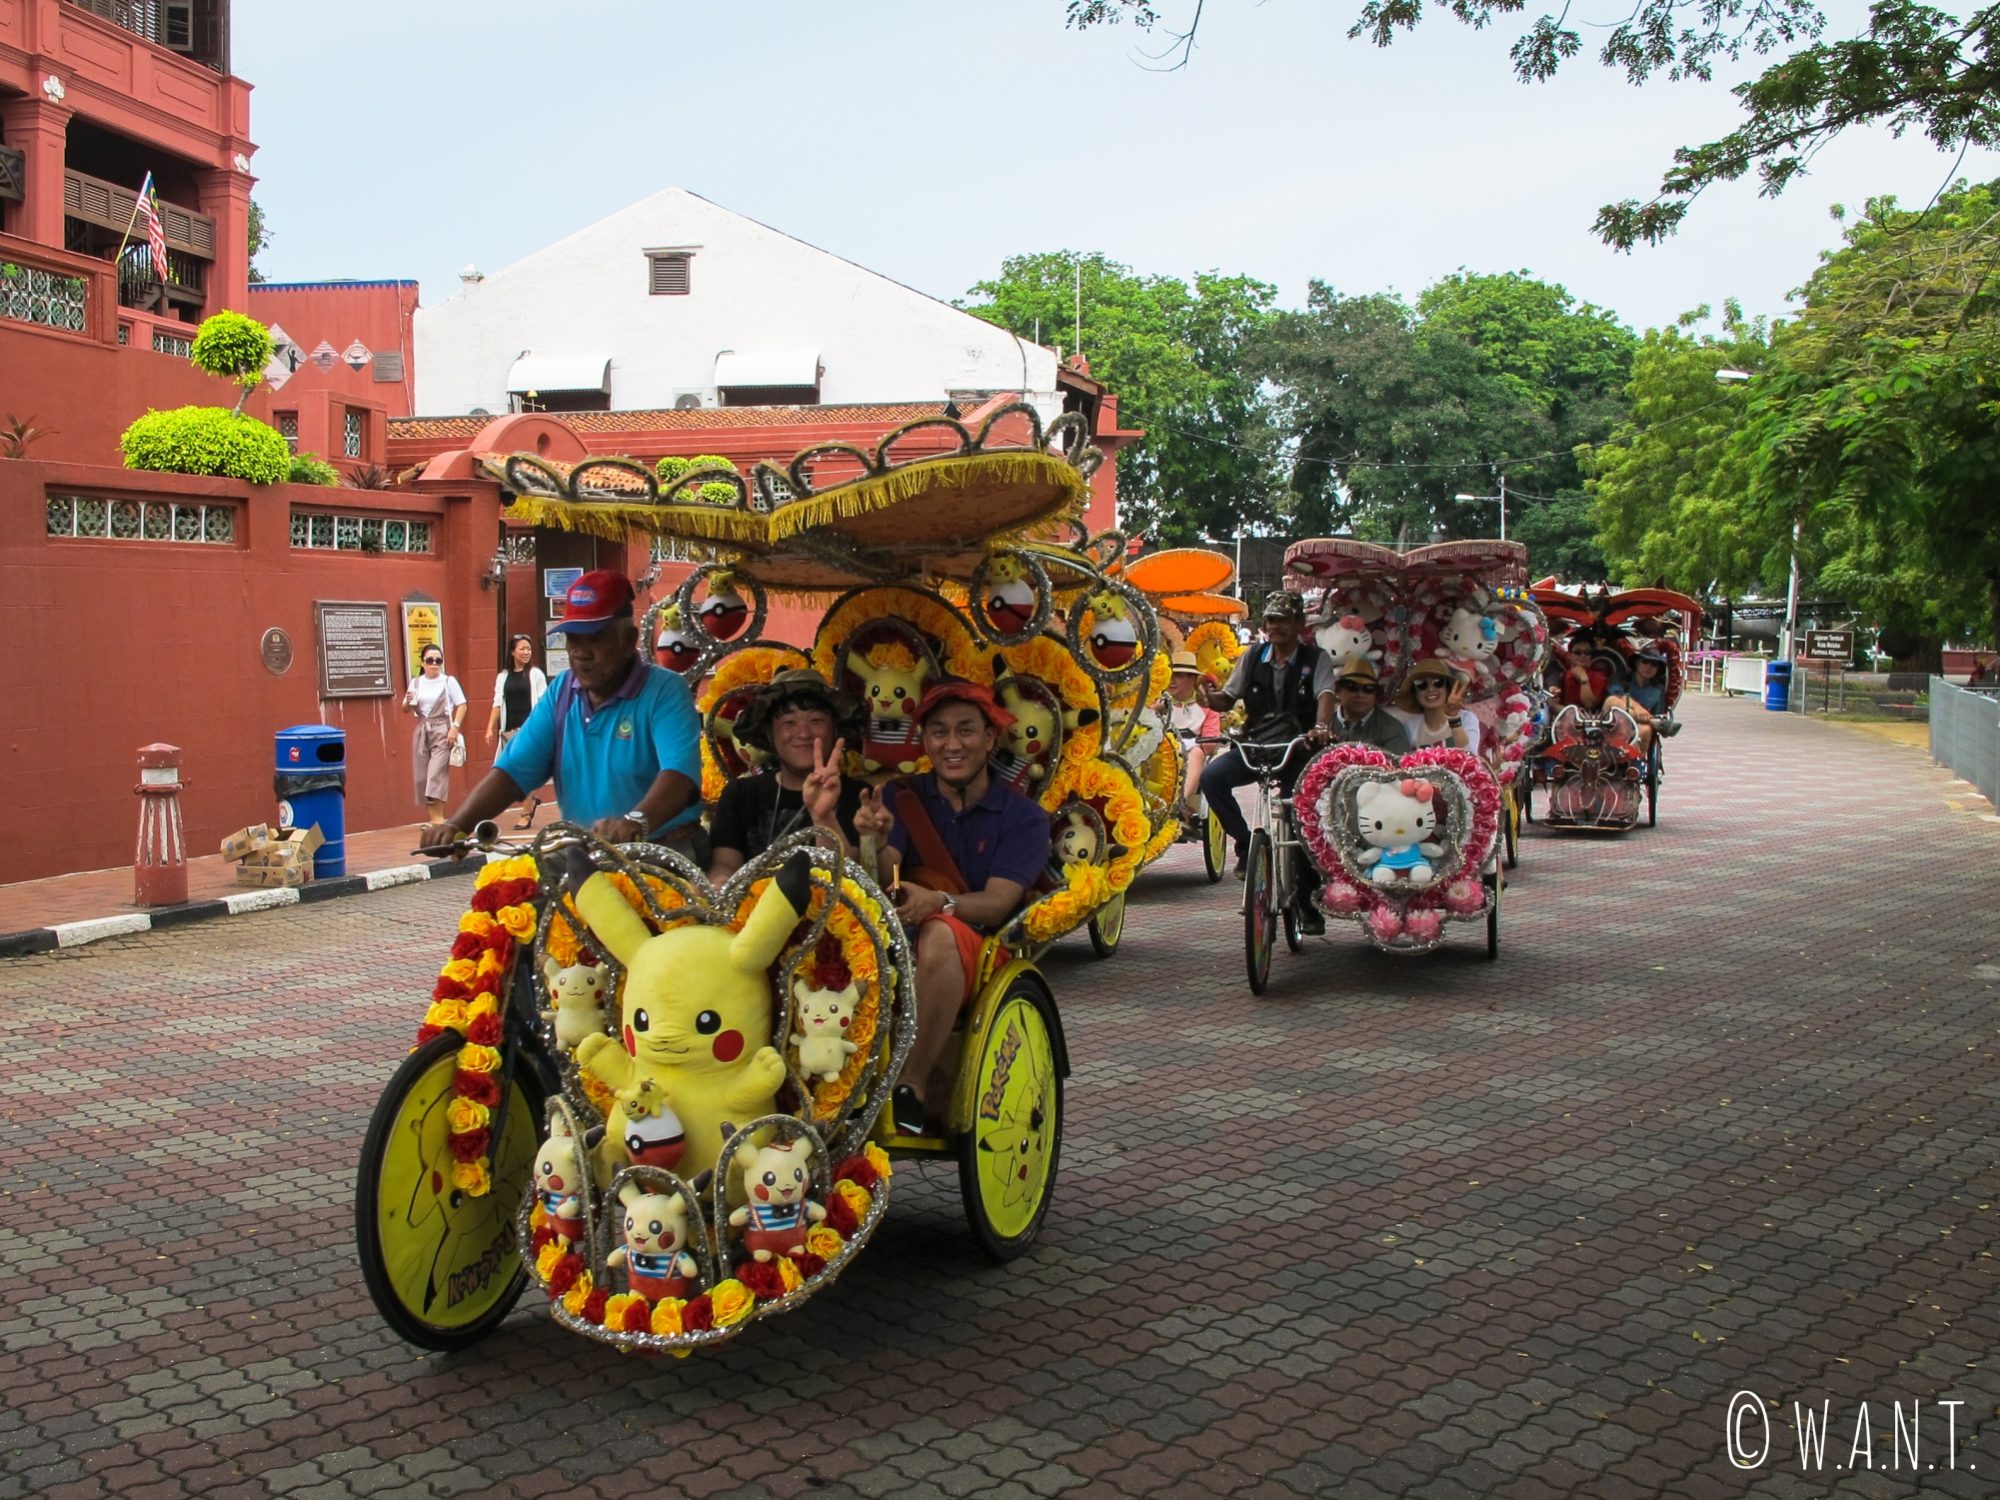 Horde de tuk-tuks dans les rues du centre historique de Malacca